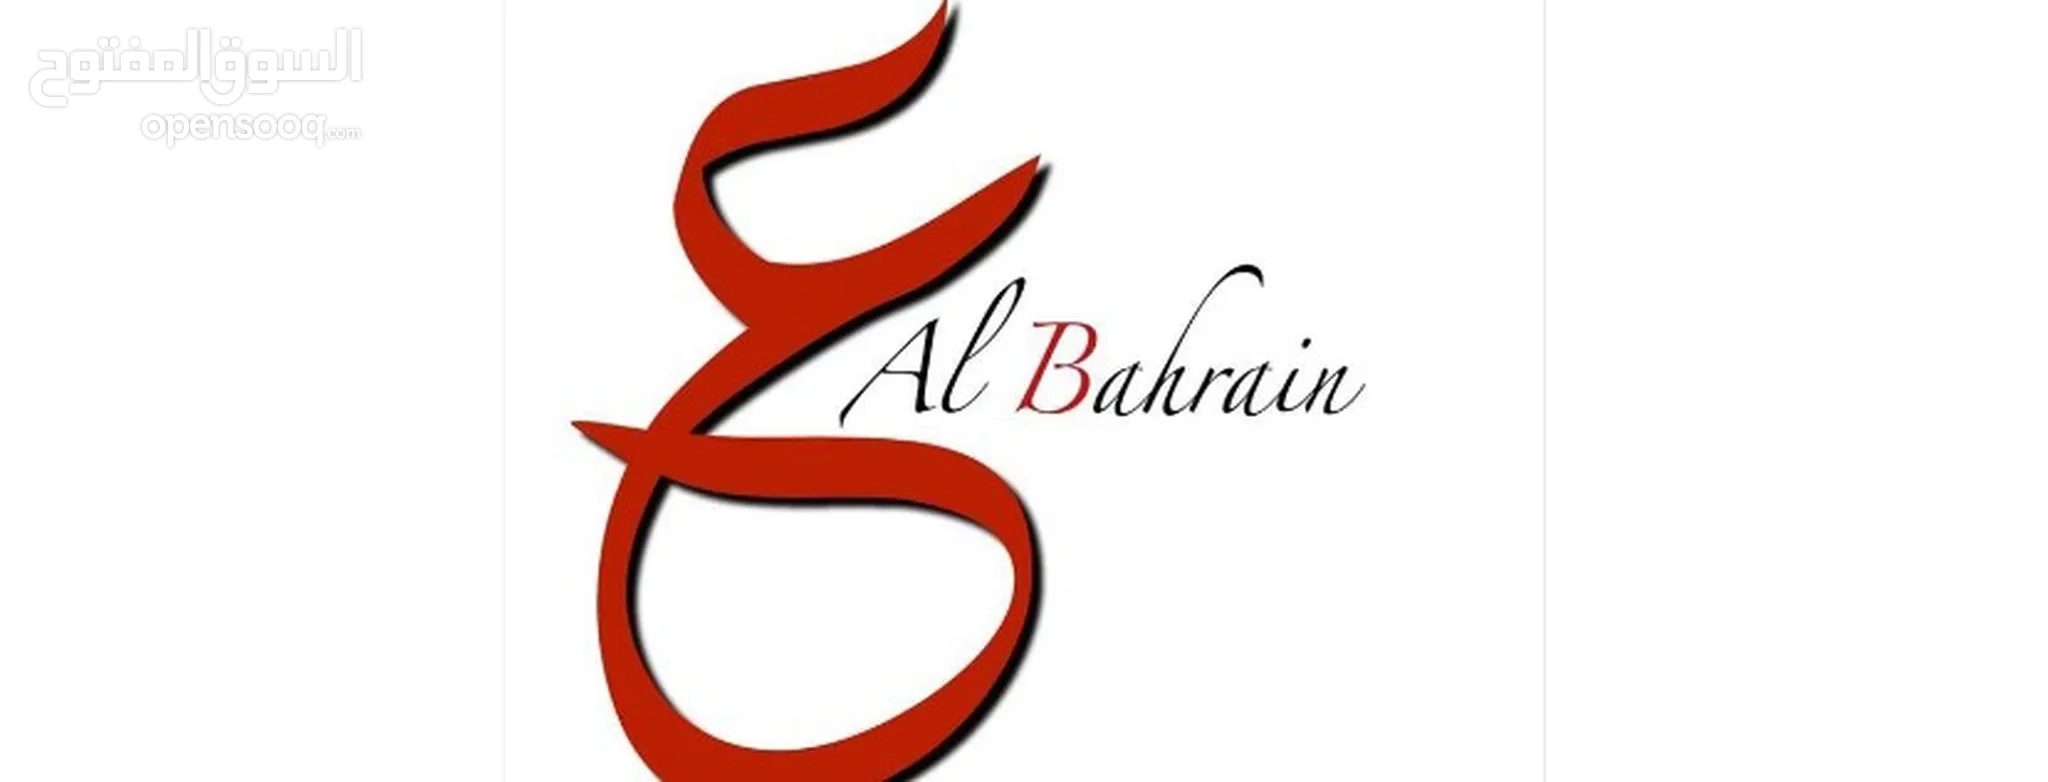  عين البحرين العقاري Ain AlBahrain 